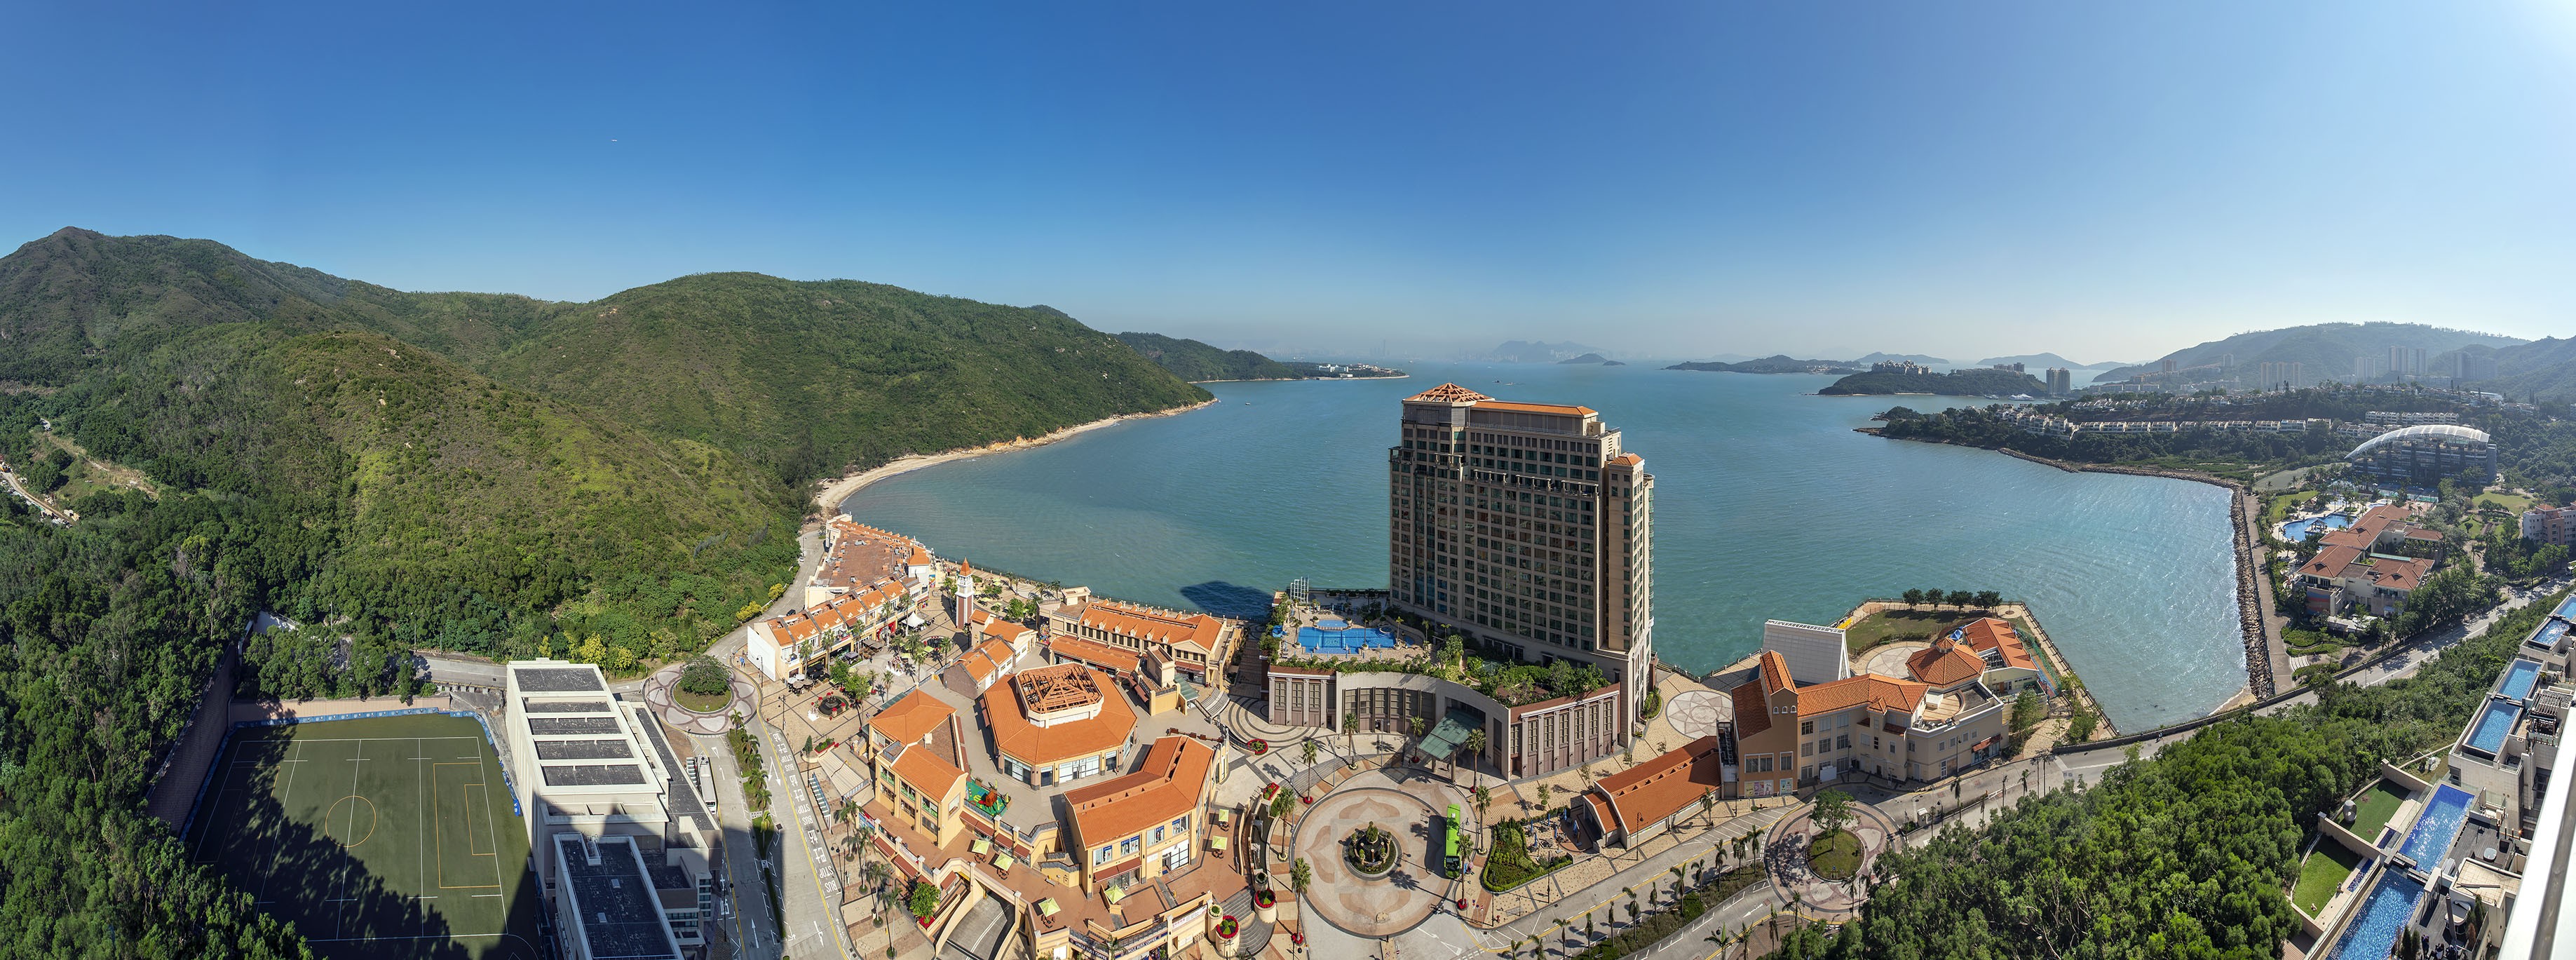 Poggibonsi, Discovery Bay, developed by Hong Kong Resort Company (HKR) International